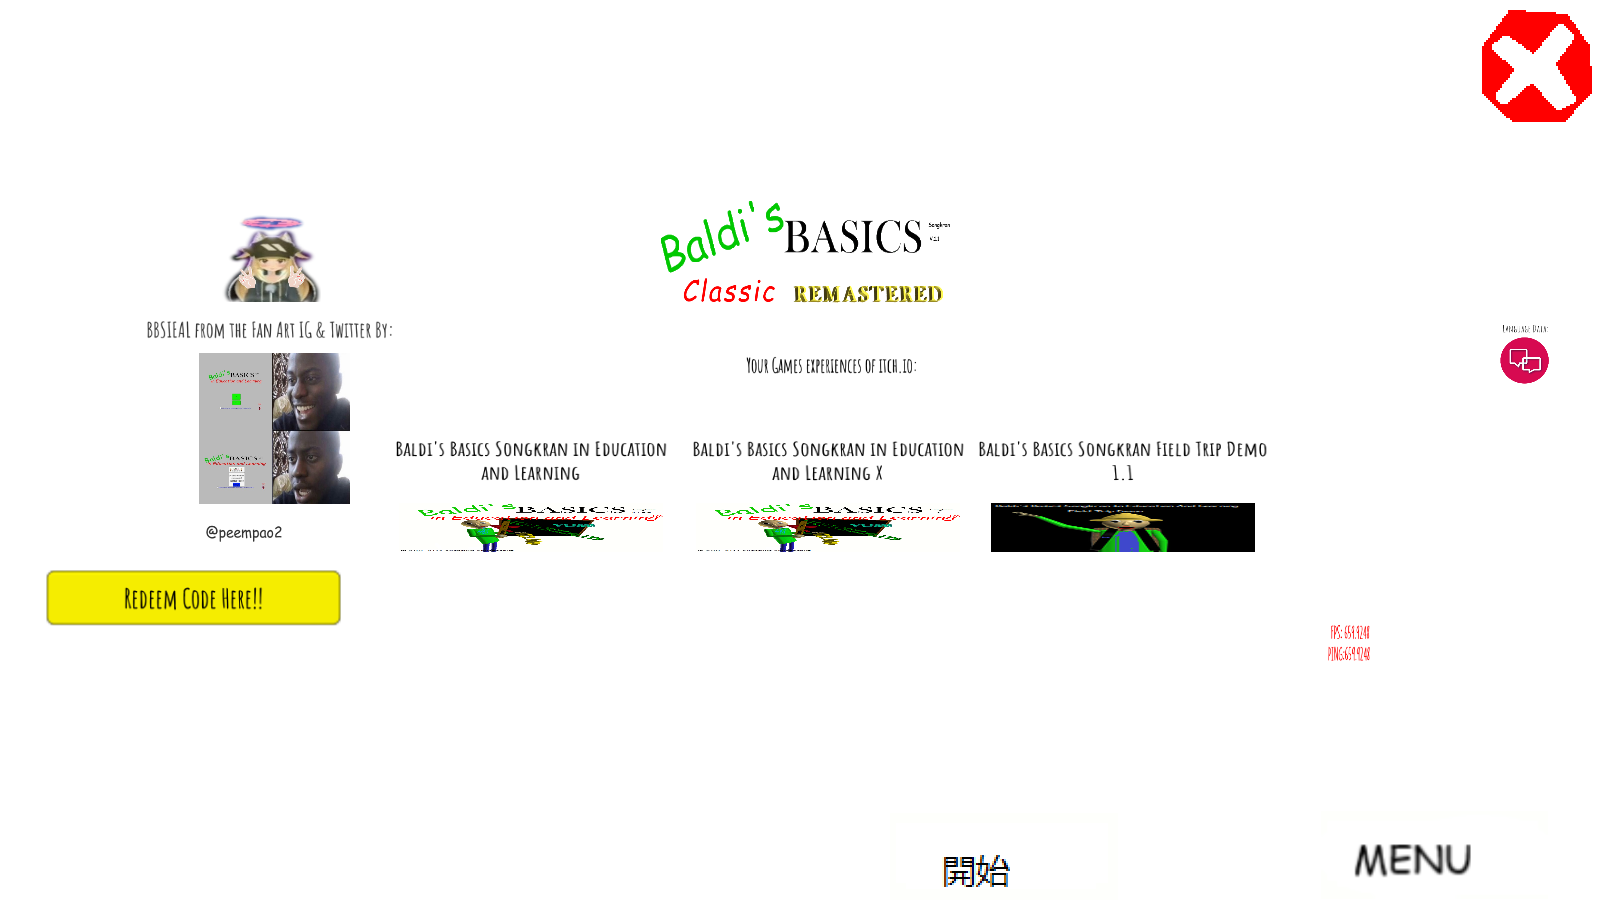 Baldi's Basics Songs Download - Free Online Songs @ JioSaavn